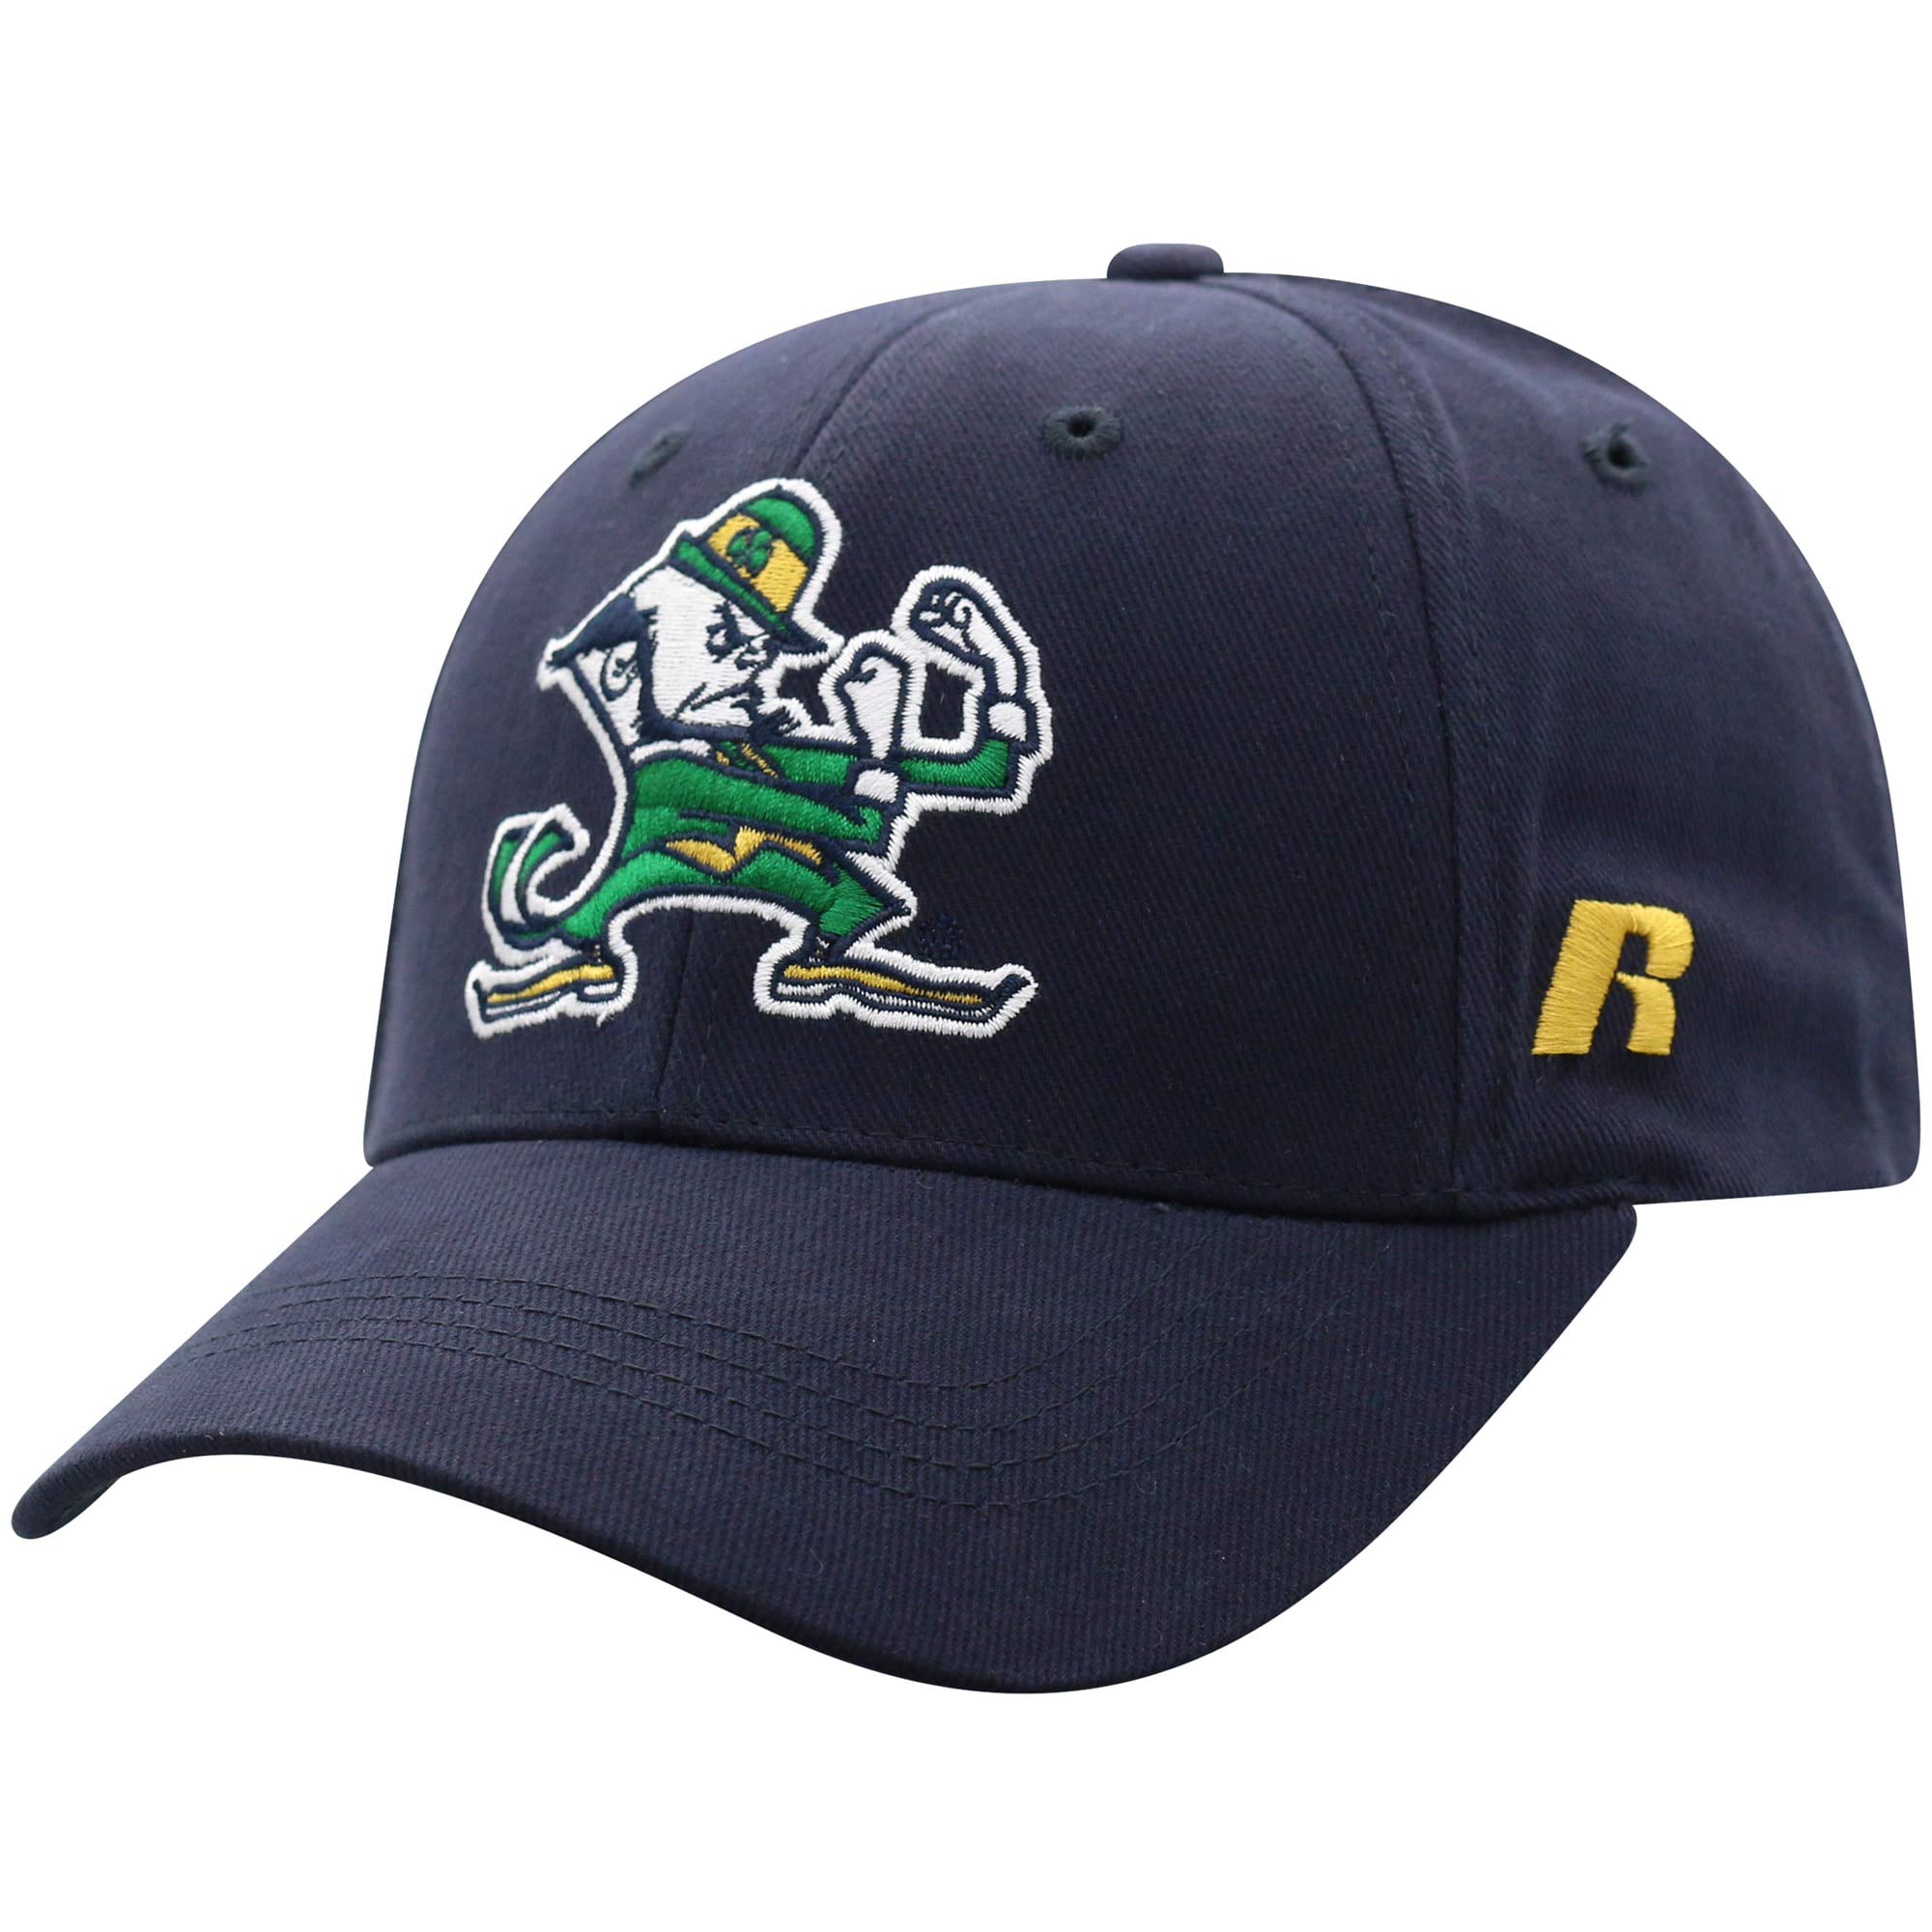 Notre Dame Fighting Irish Embroidered Men's Gray Hat 0719